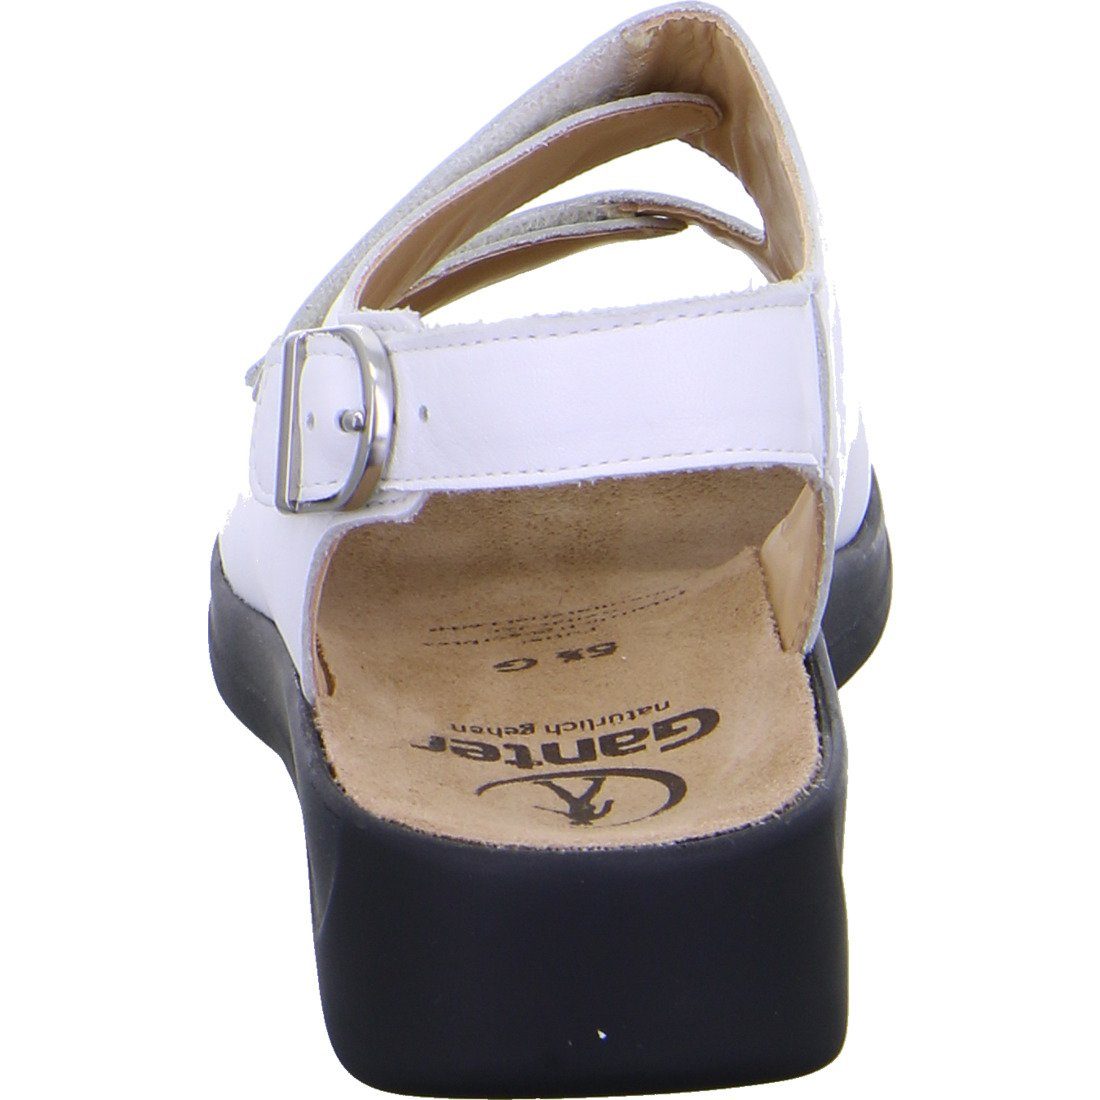 Schuhe, weiß - Monica Ganter Sandalette 045896 Ganter Materialmix Sandalette